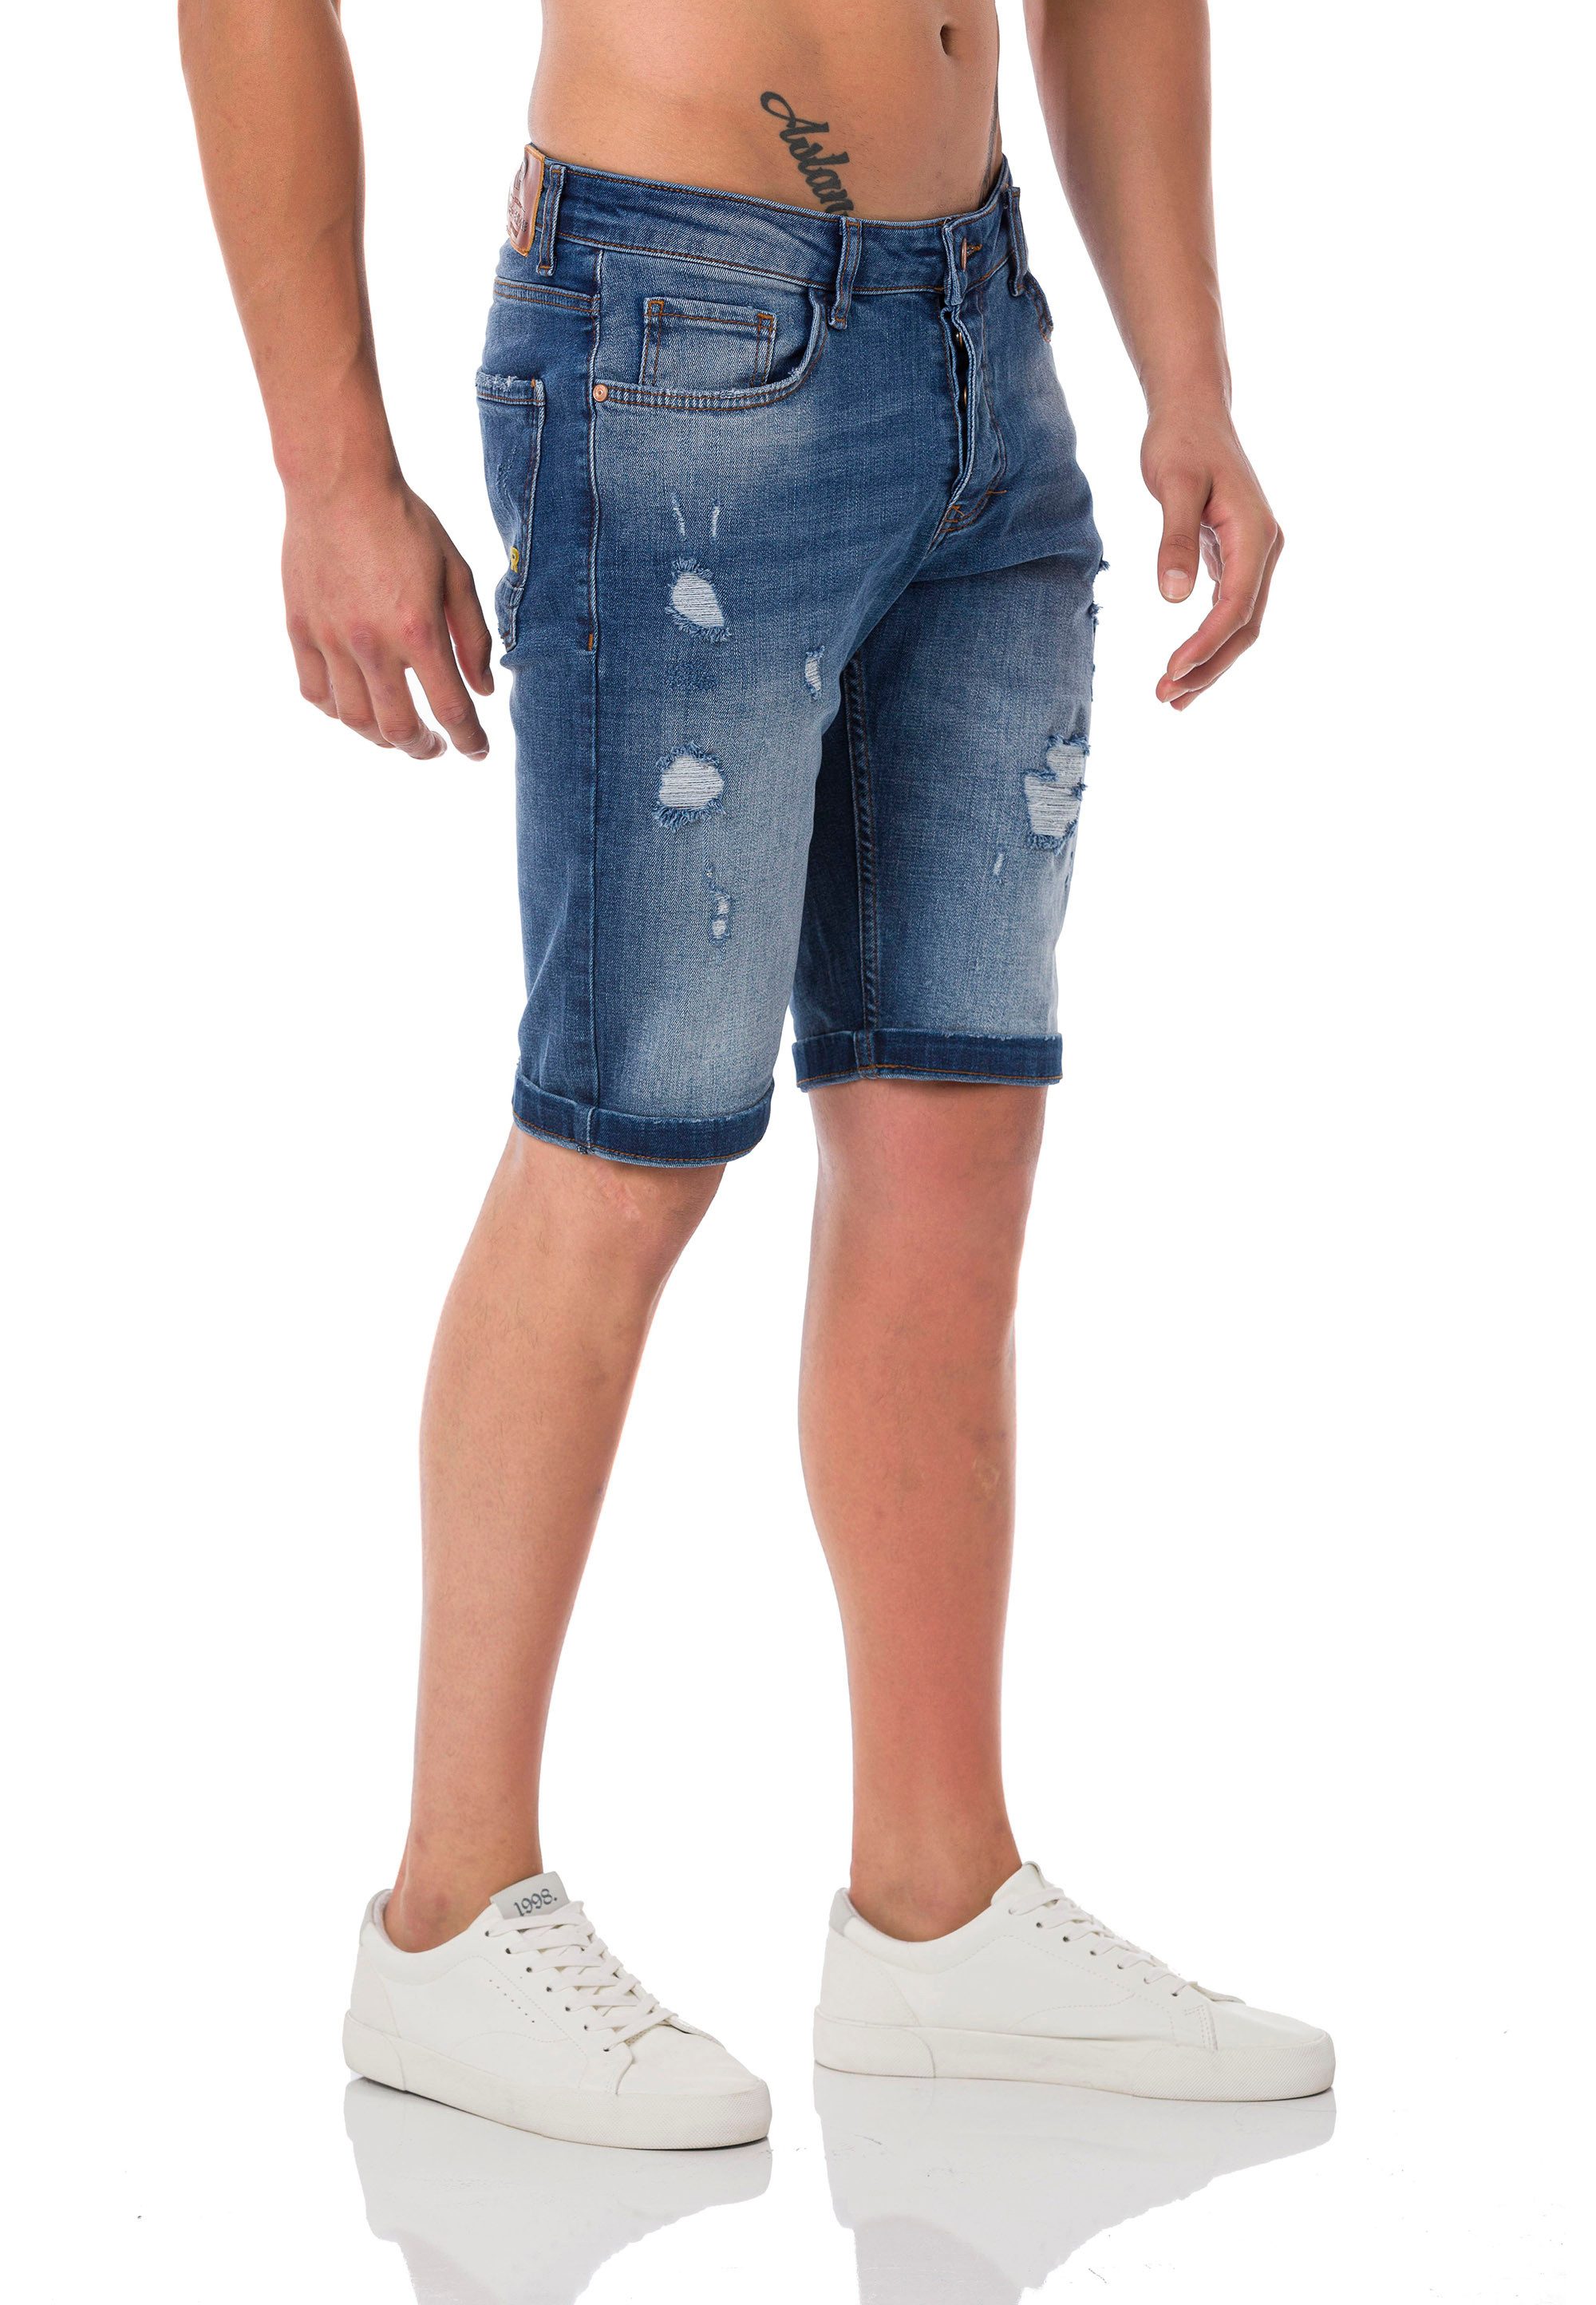 RedBridge Jeansshorts Red Bridge Herren Jeans Shorts Kurze Hose Denim Diverse fetzige Stellen